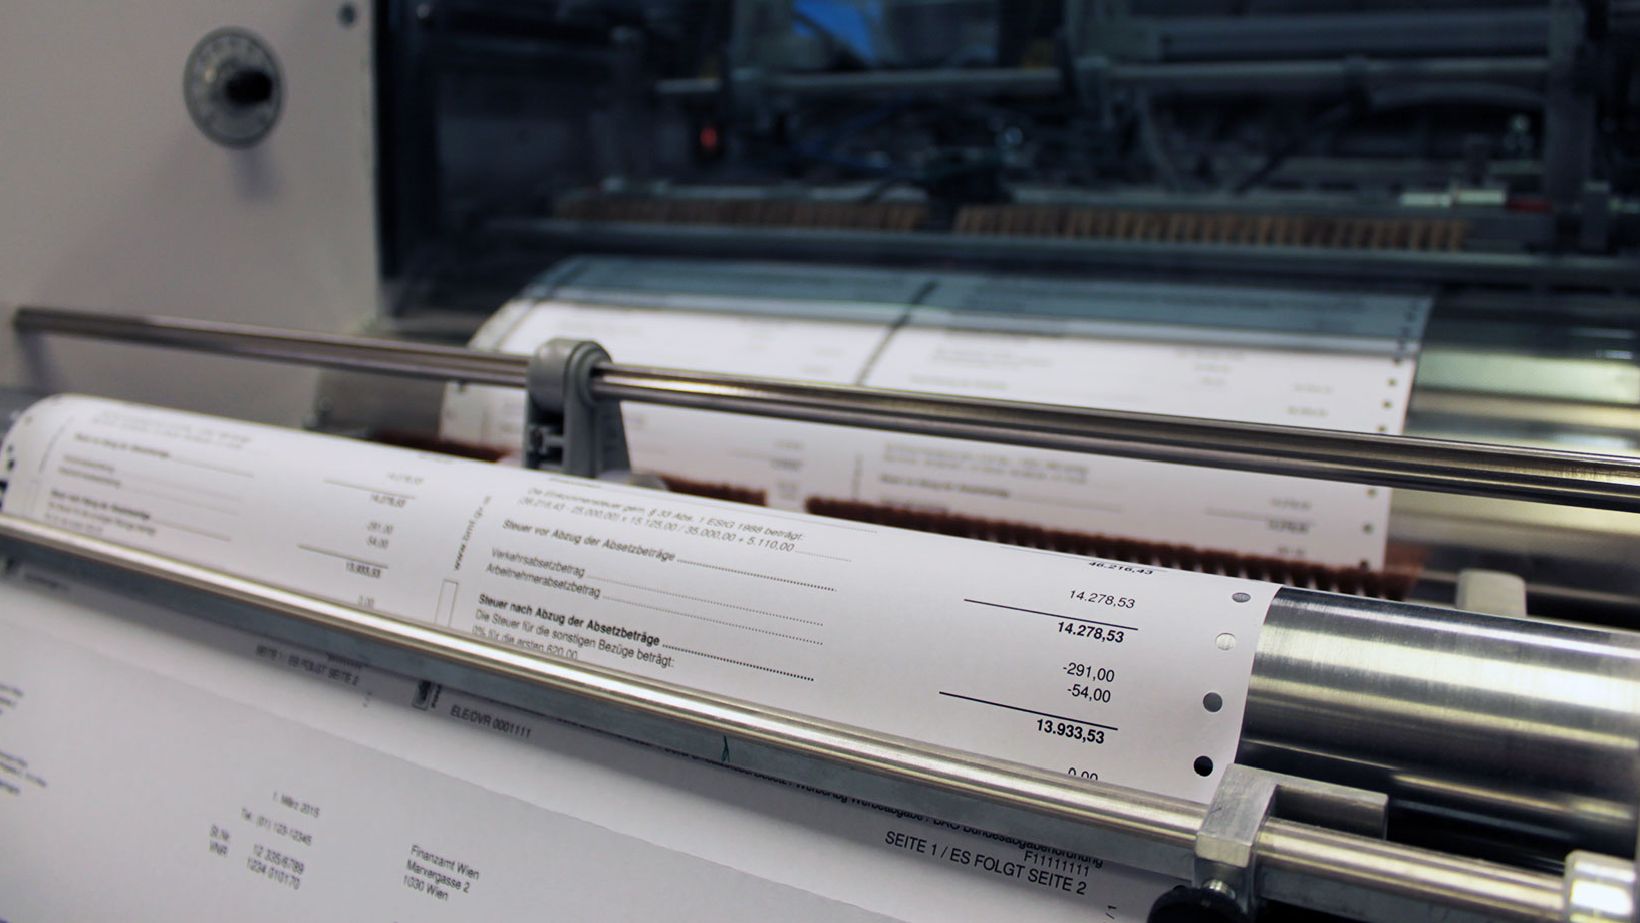 Macroshot of a printing process